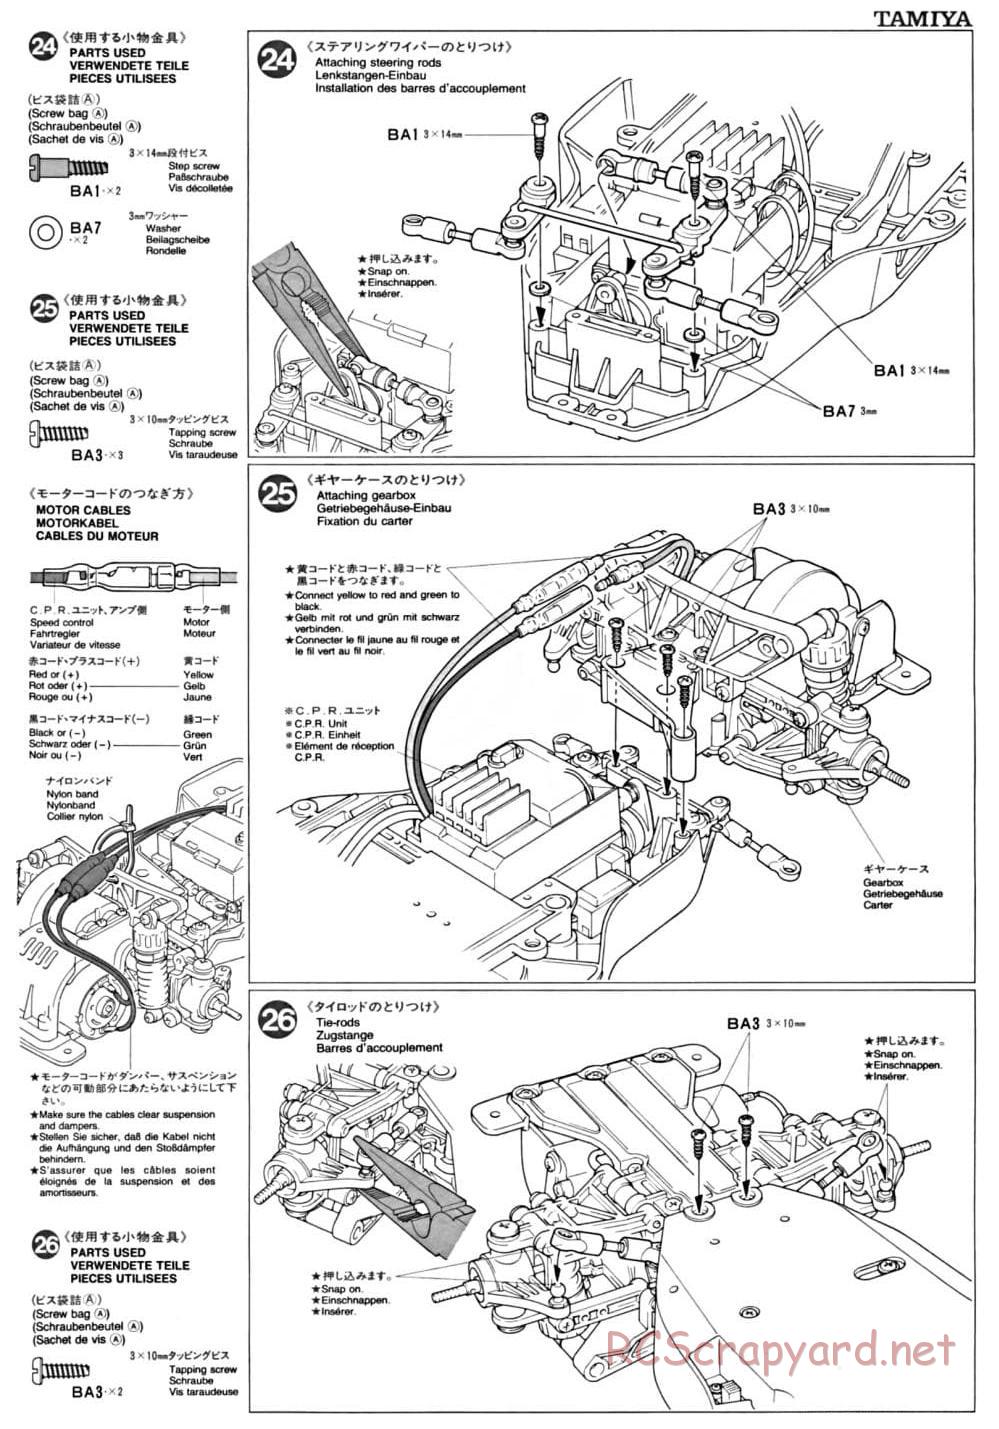 Tamiya - FF-01 Chassis - Manual - Page 13